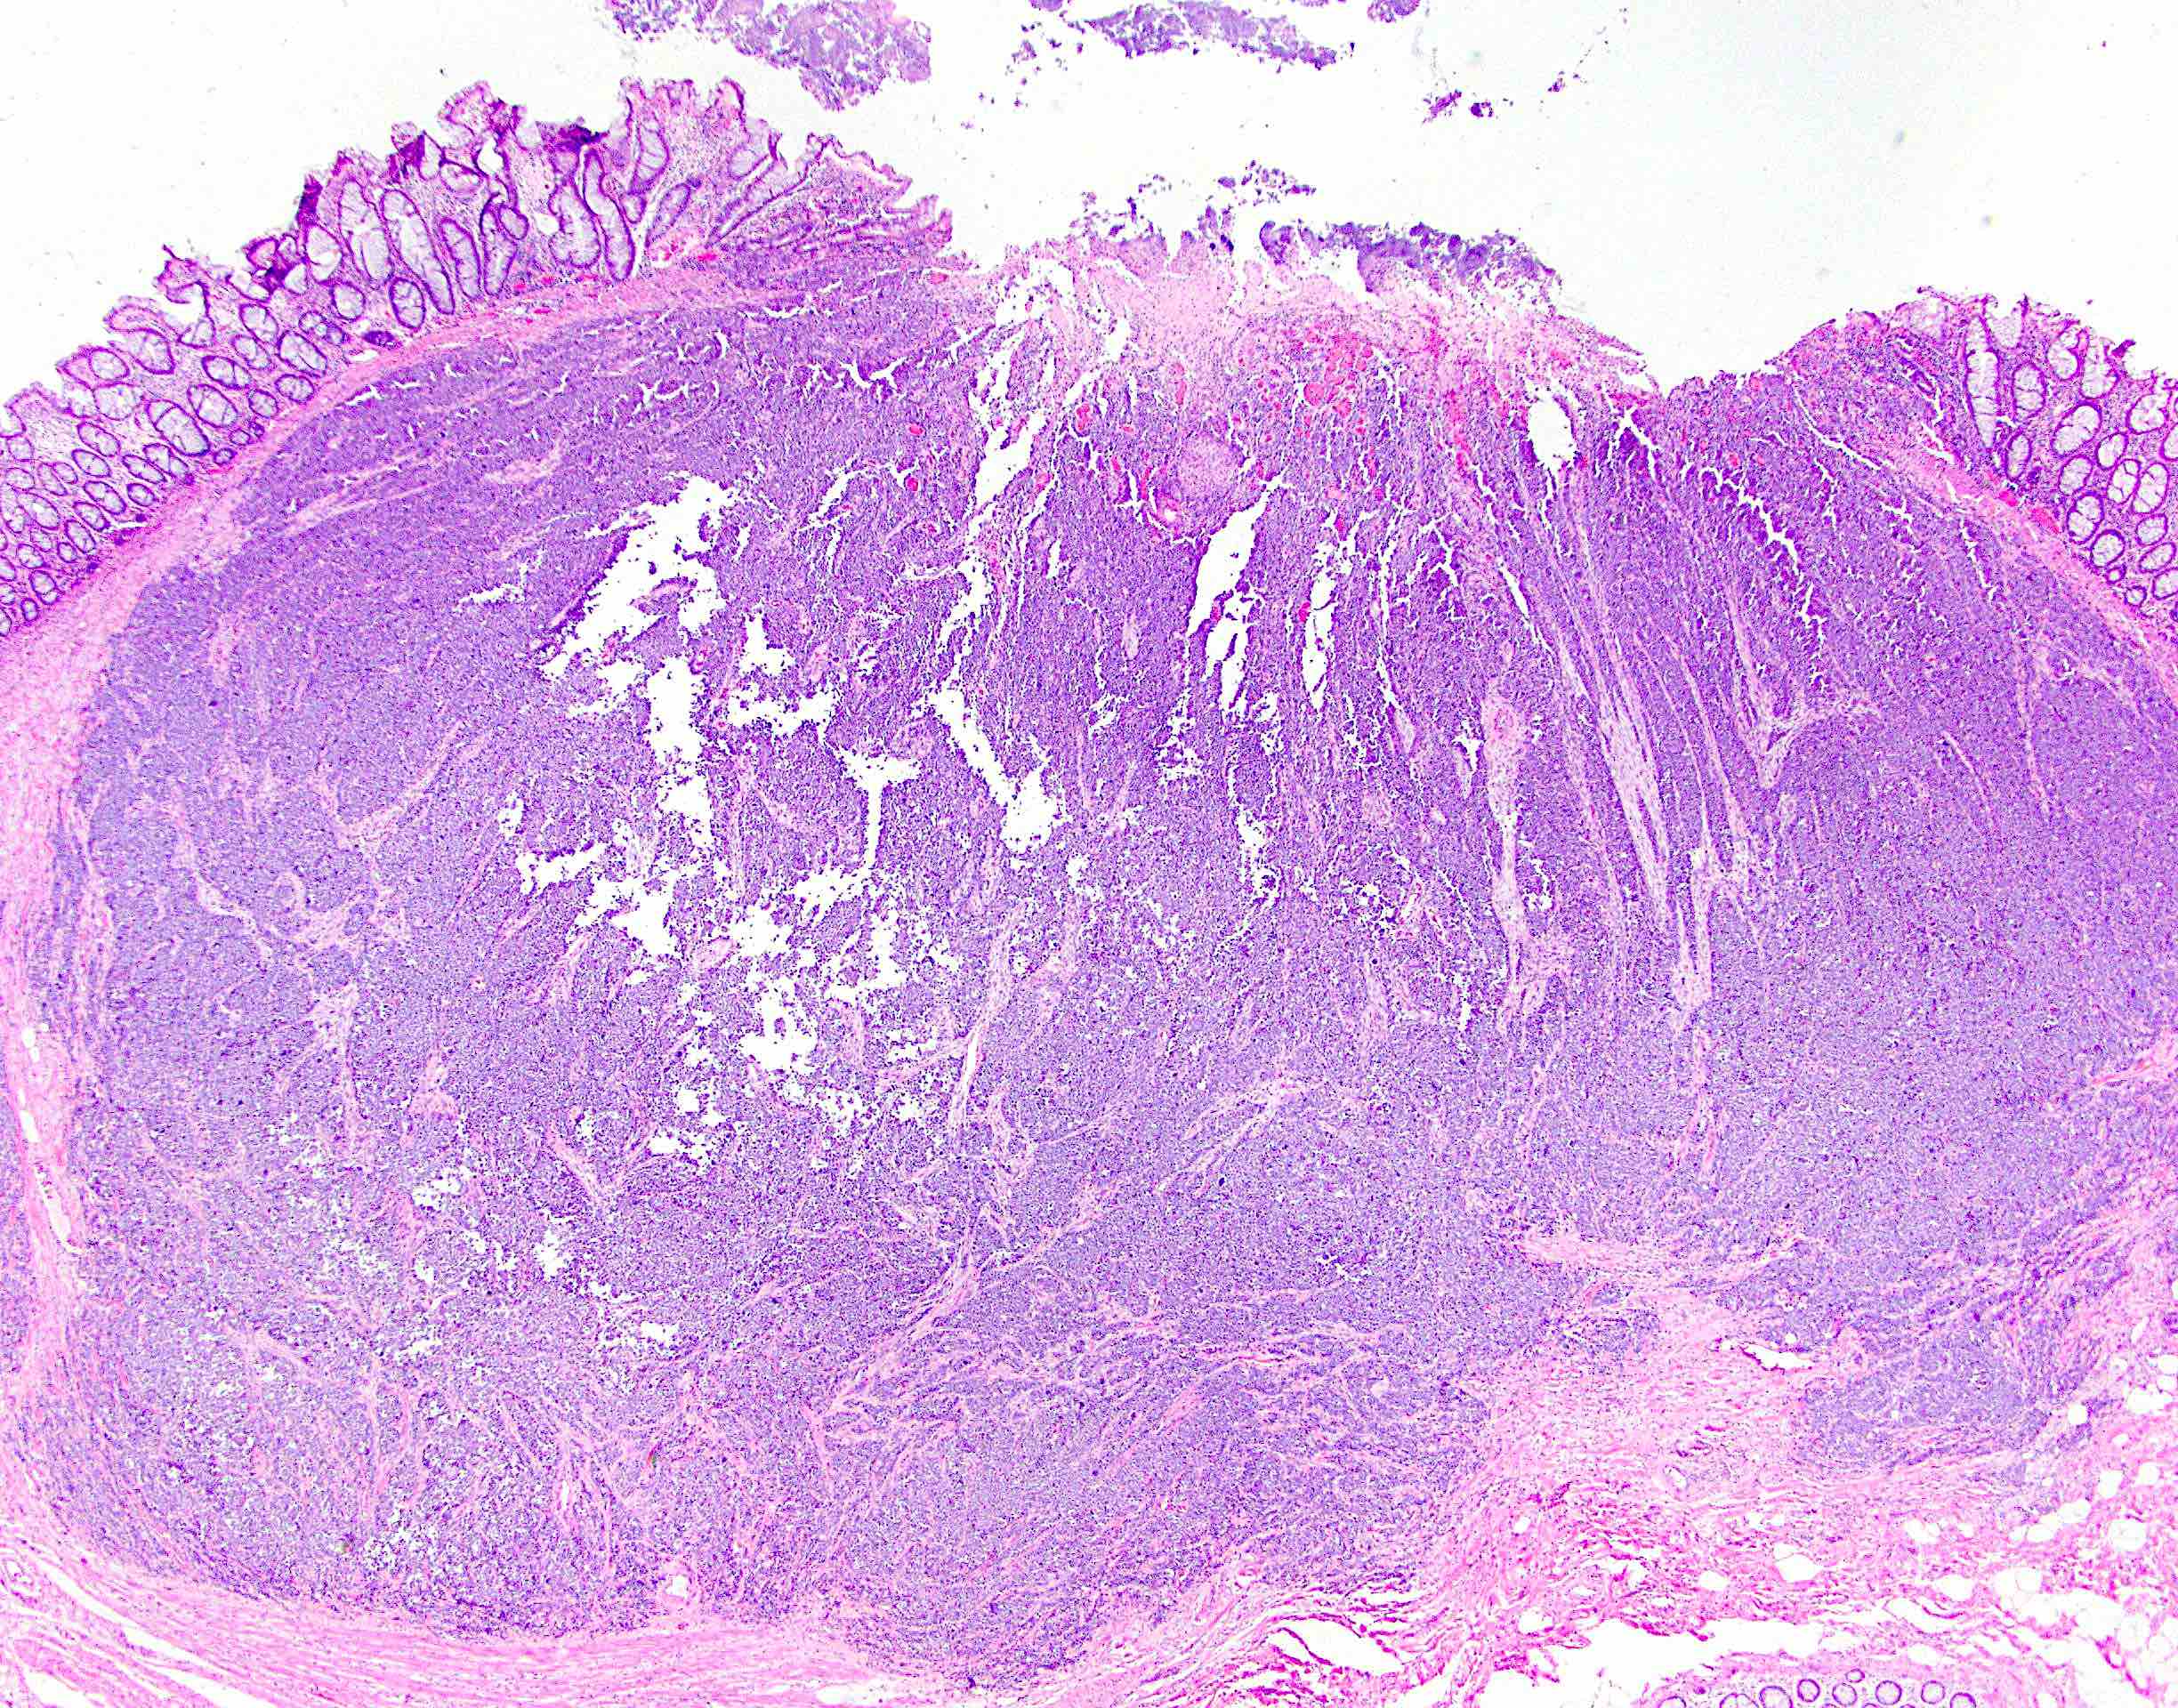 Large cell neuroendocrine carcinoma